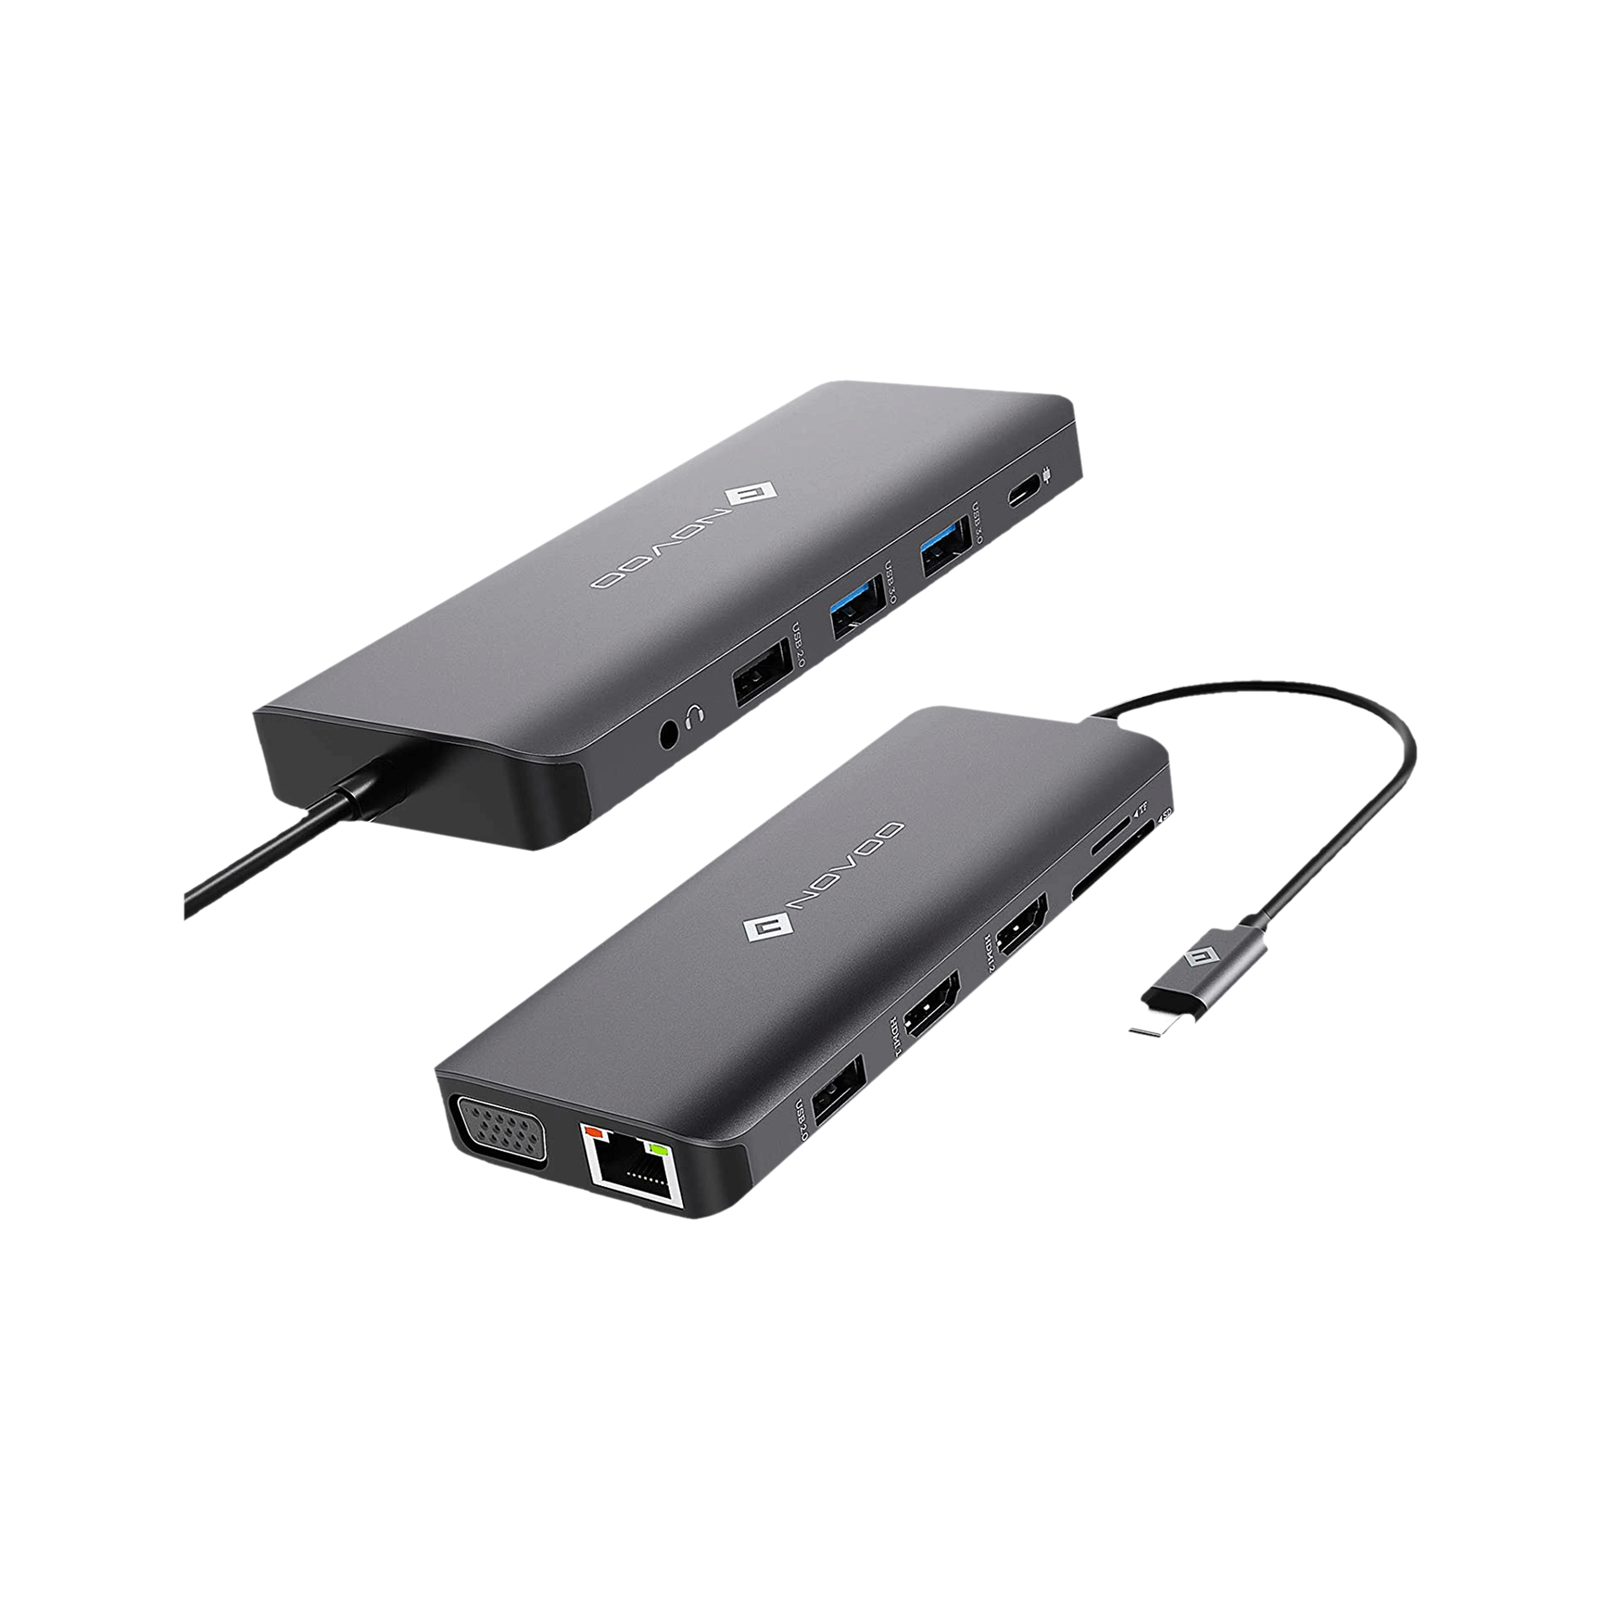 NOVOO 12-in-1 USB 3.0 Type C to USB 2.0 Type A, USB 3.0 Type A, USB Type C, SD Card Slot, HDMI, LAN Port, VGA Port, TF Card, 3.5mm Stereo USB Hub (Triple Display Monitor, Dark Grey)